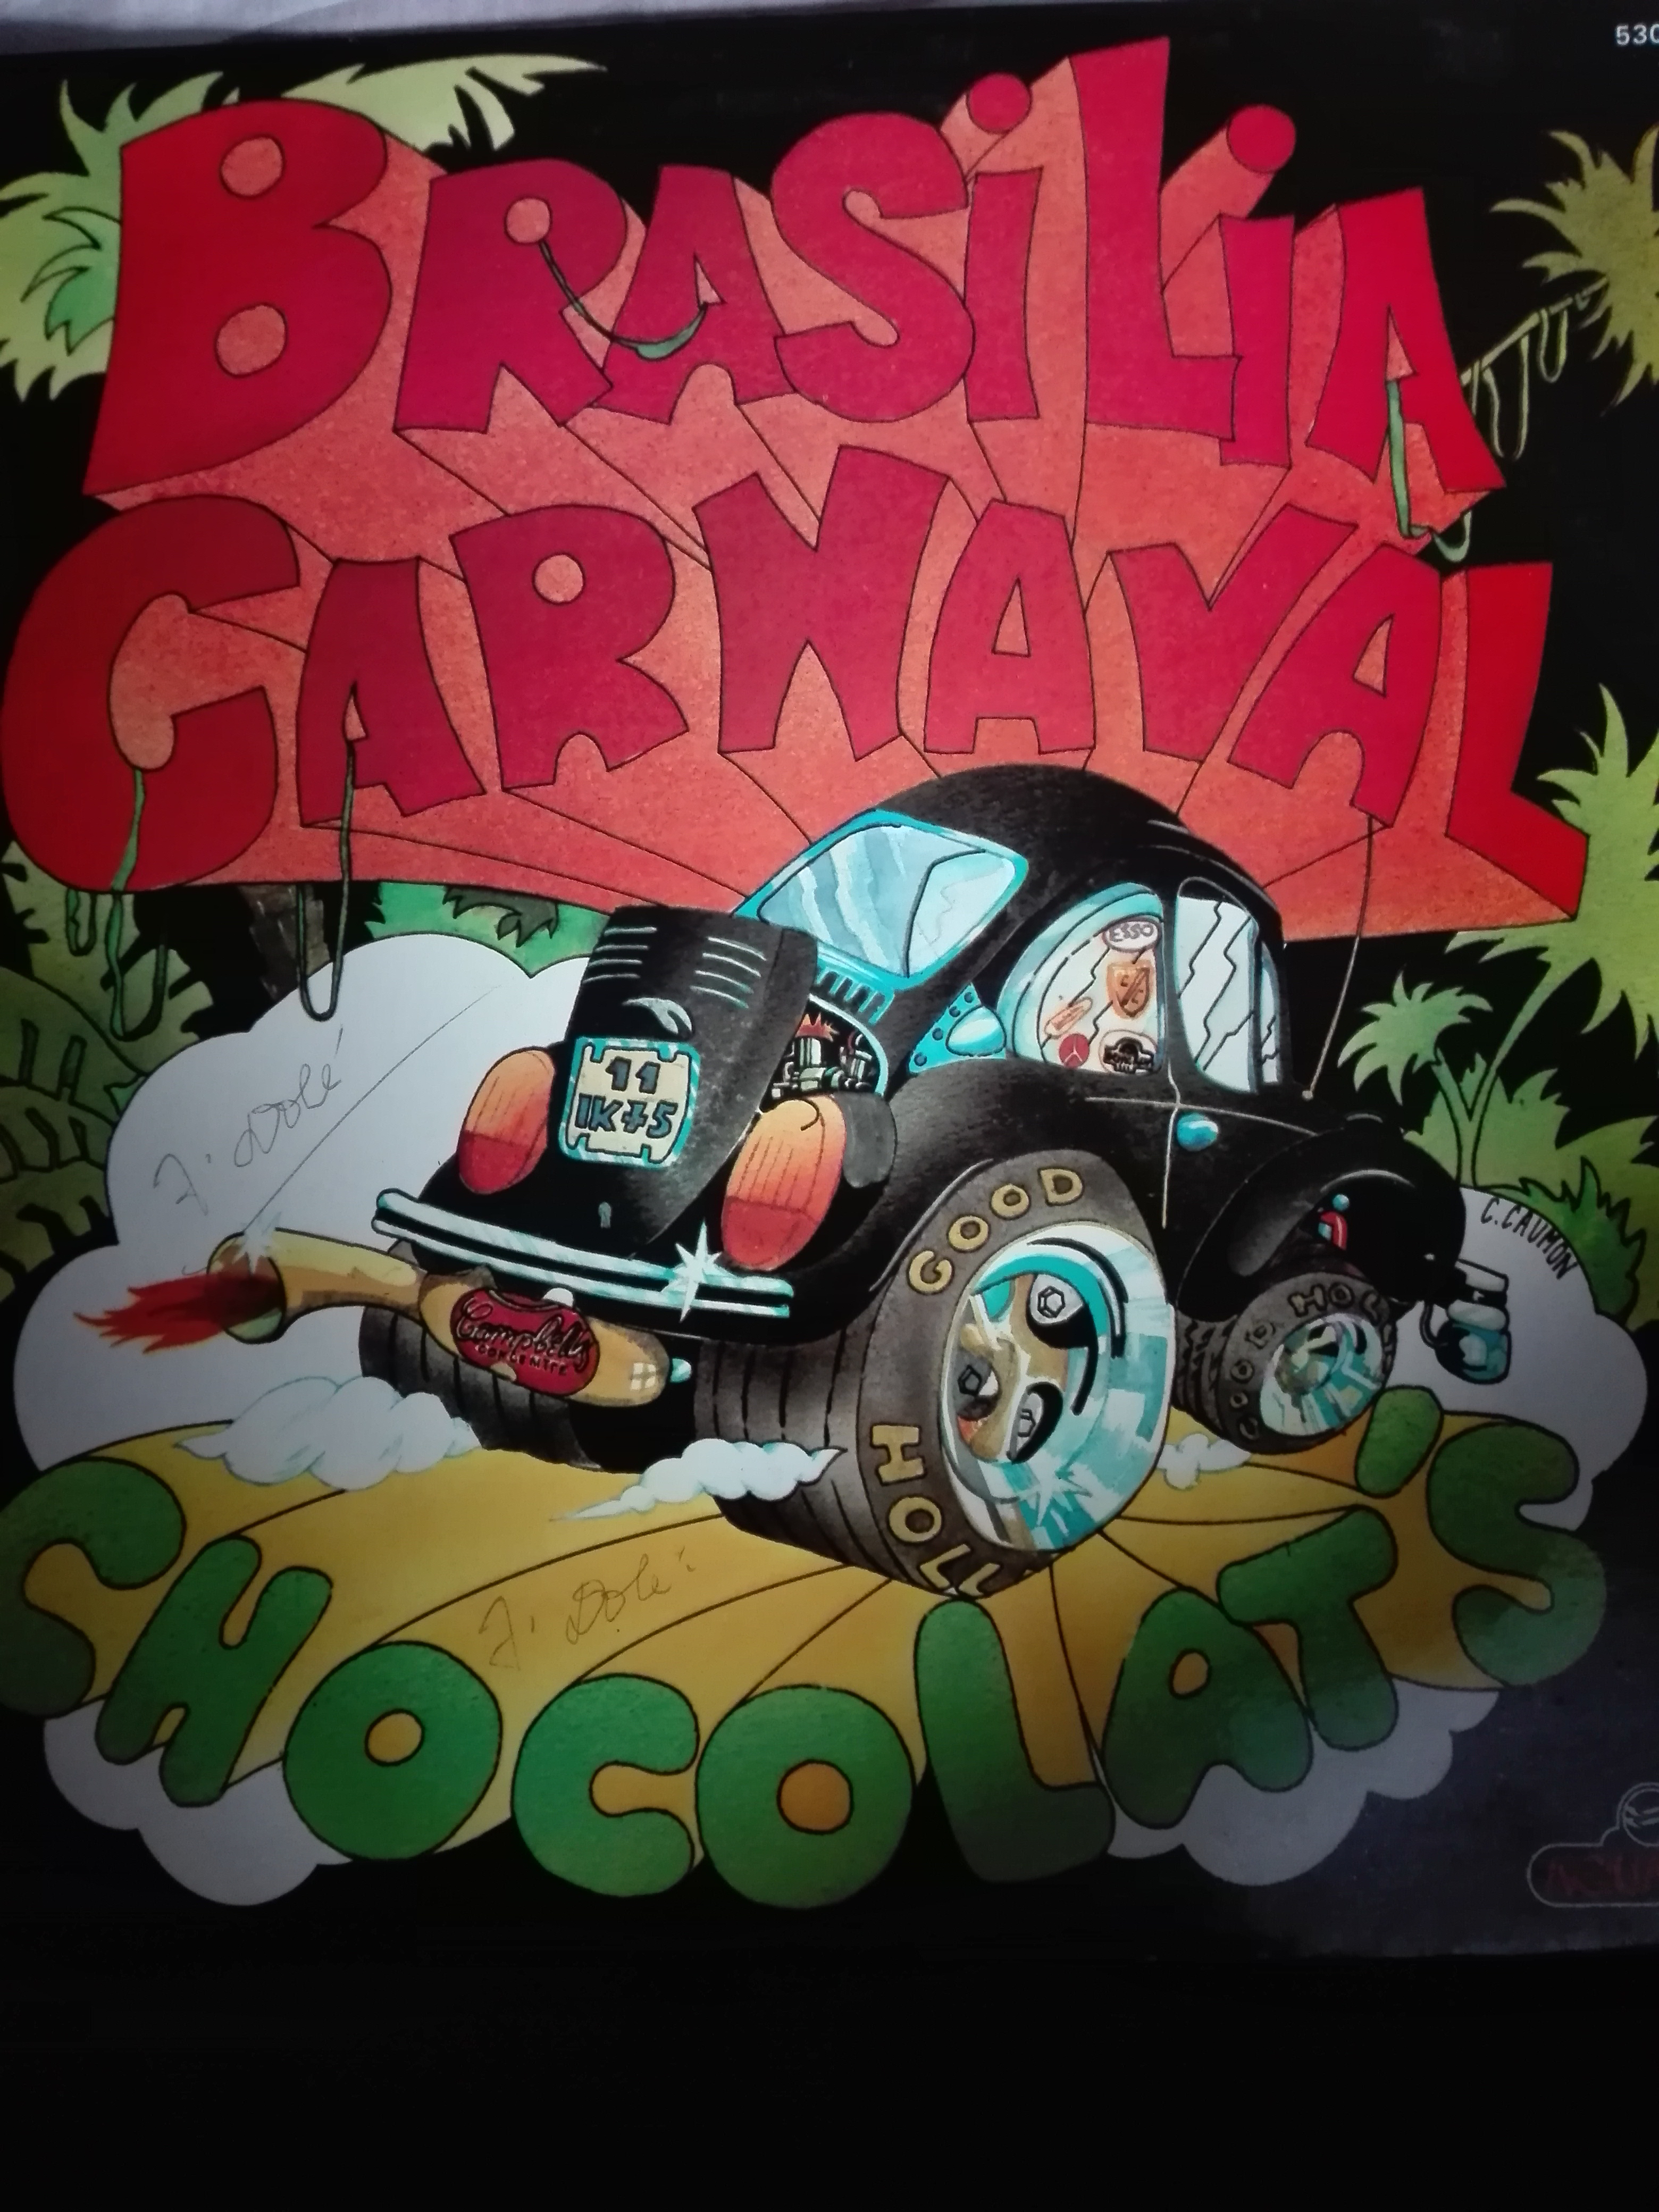 Acheter disque vinyle Brasilia carnaval Chocolats a vendre